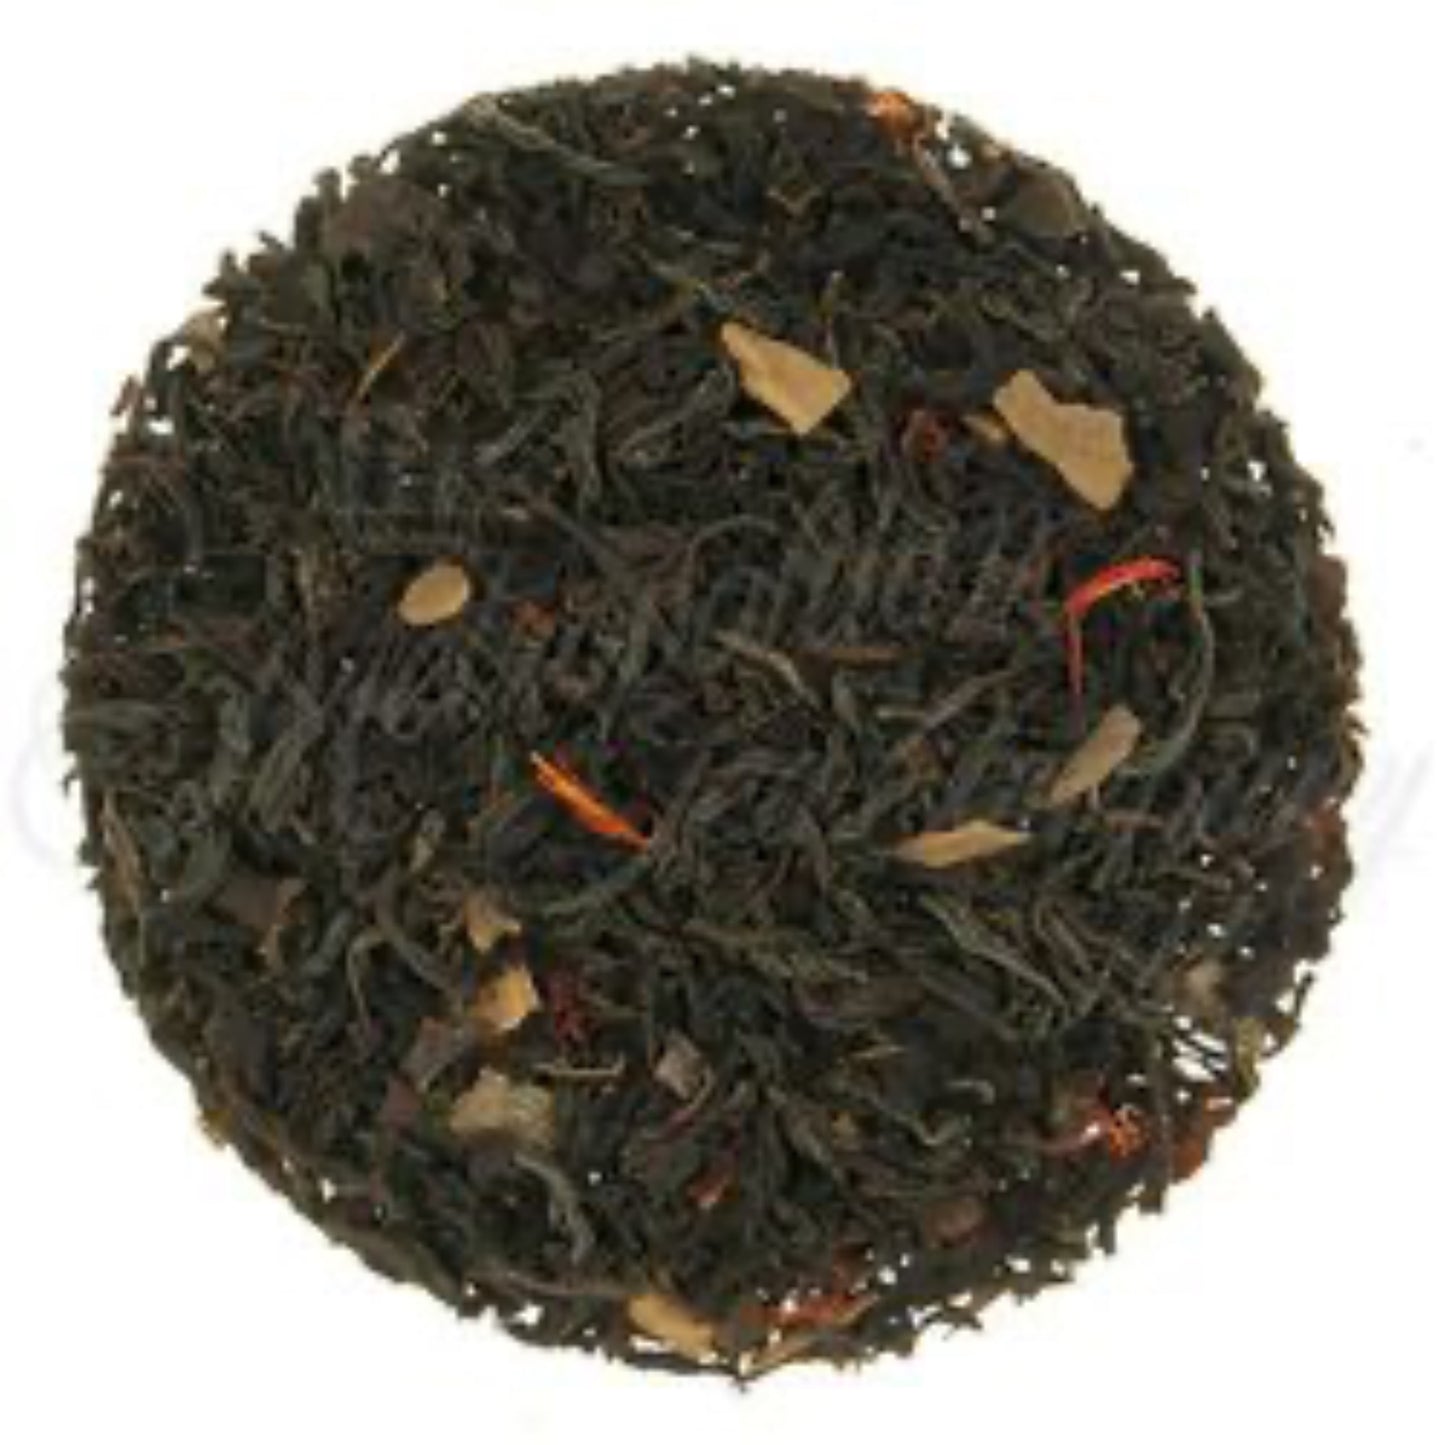 Loose leaf black tea with sprinkles of yellow and orange flower petals